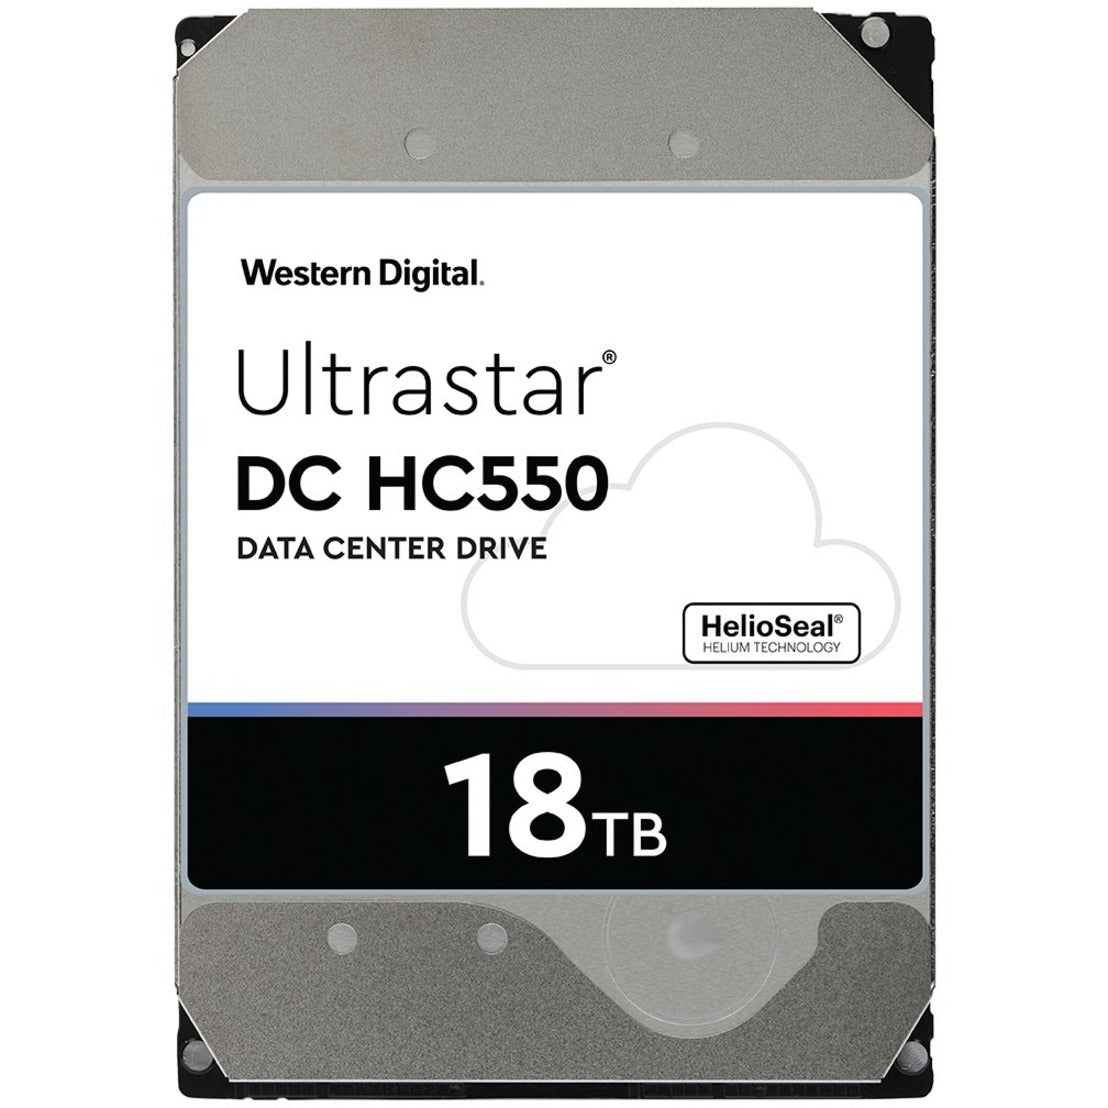 Western Digital 0F38354 DC HC550 Hard Drive, 18 TB SAS, 7200 RPM, 512e, 5 Year Warranty